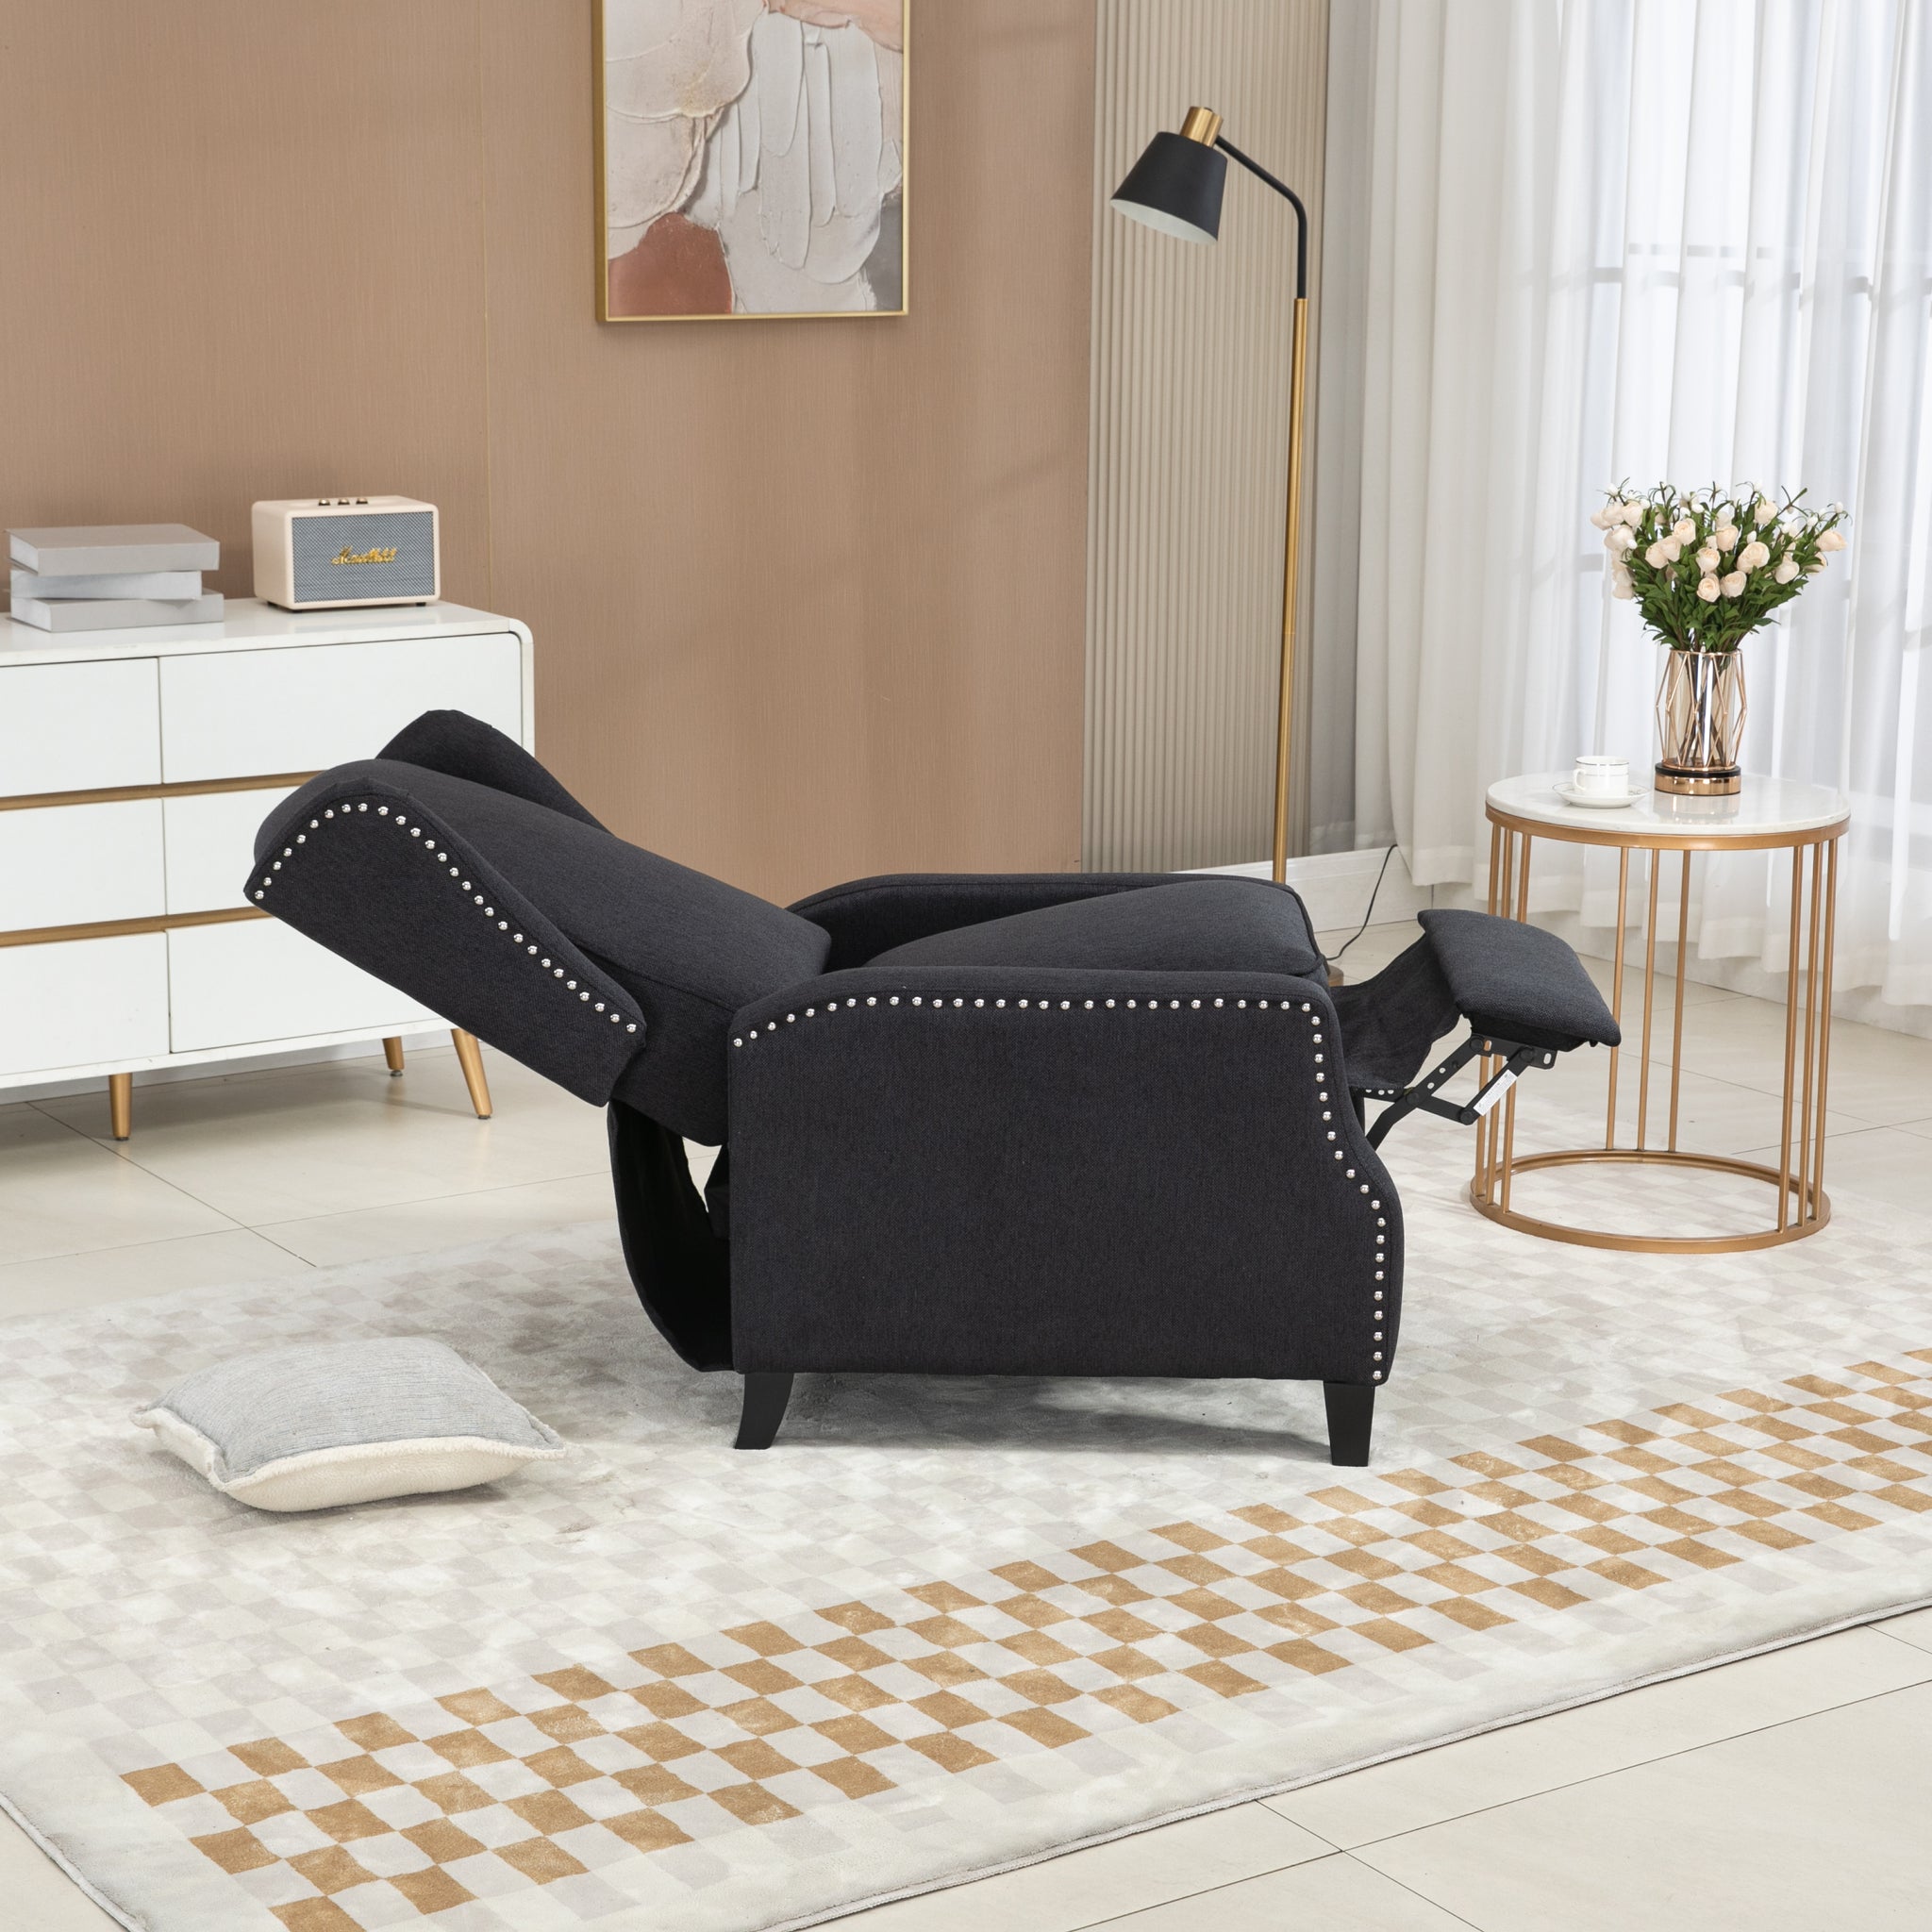 COOLMORE Modern Comfortable Upholstered leisure chair black-linen